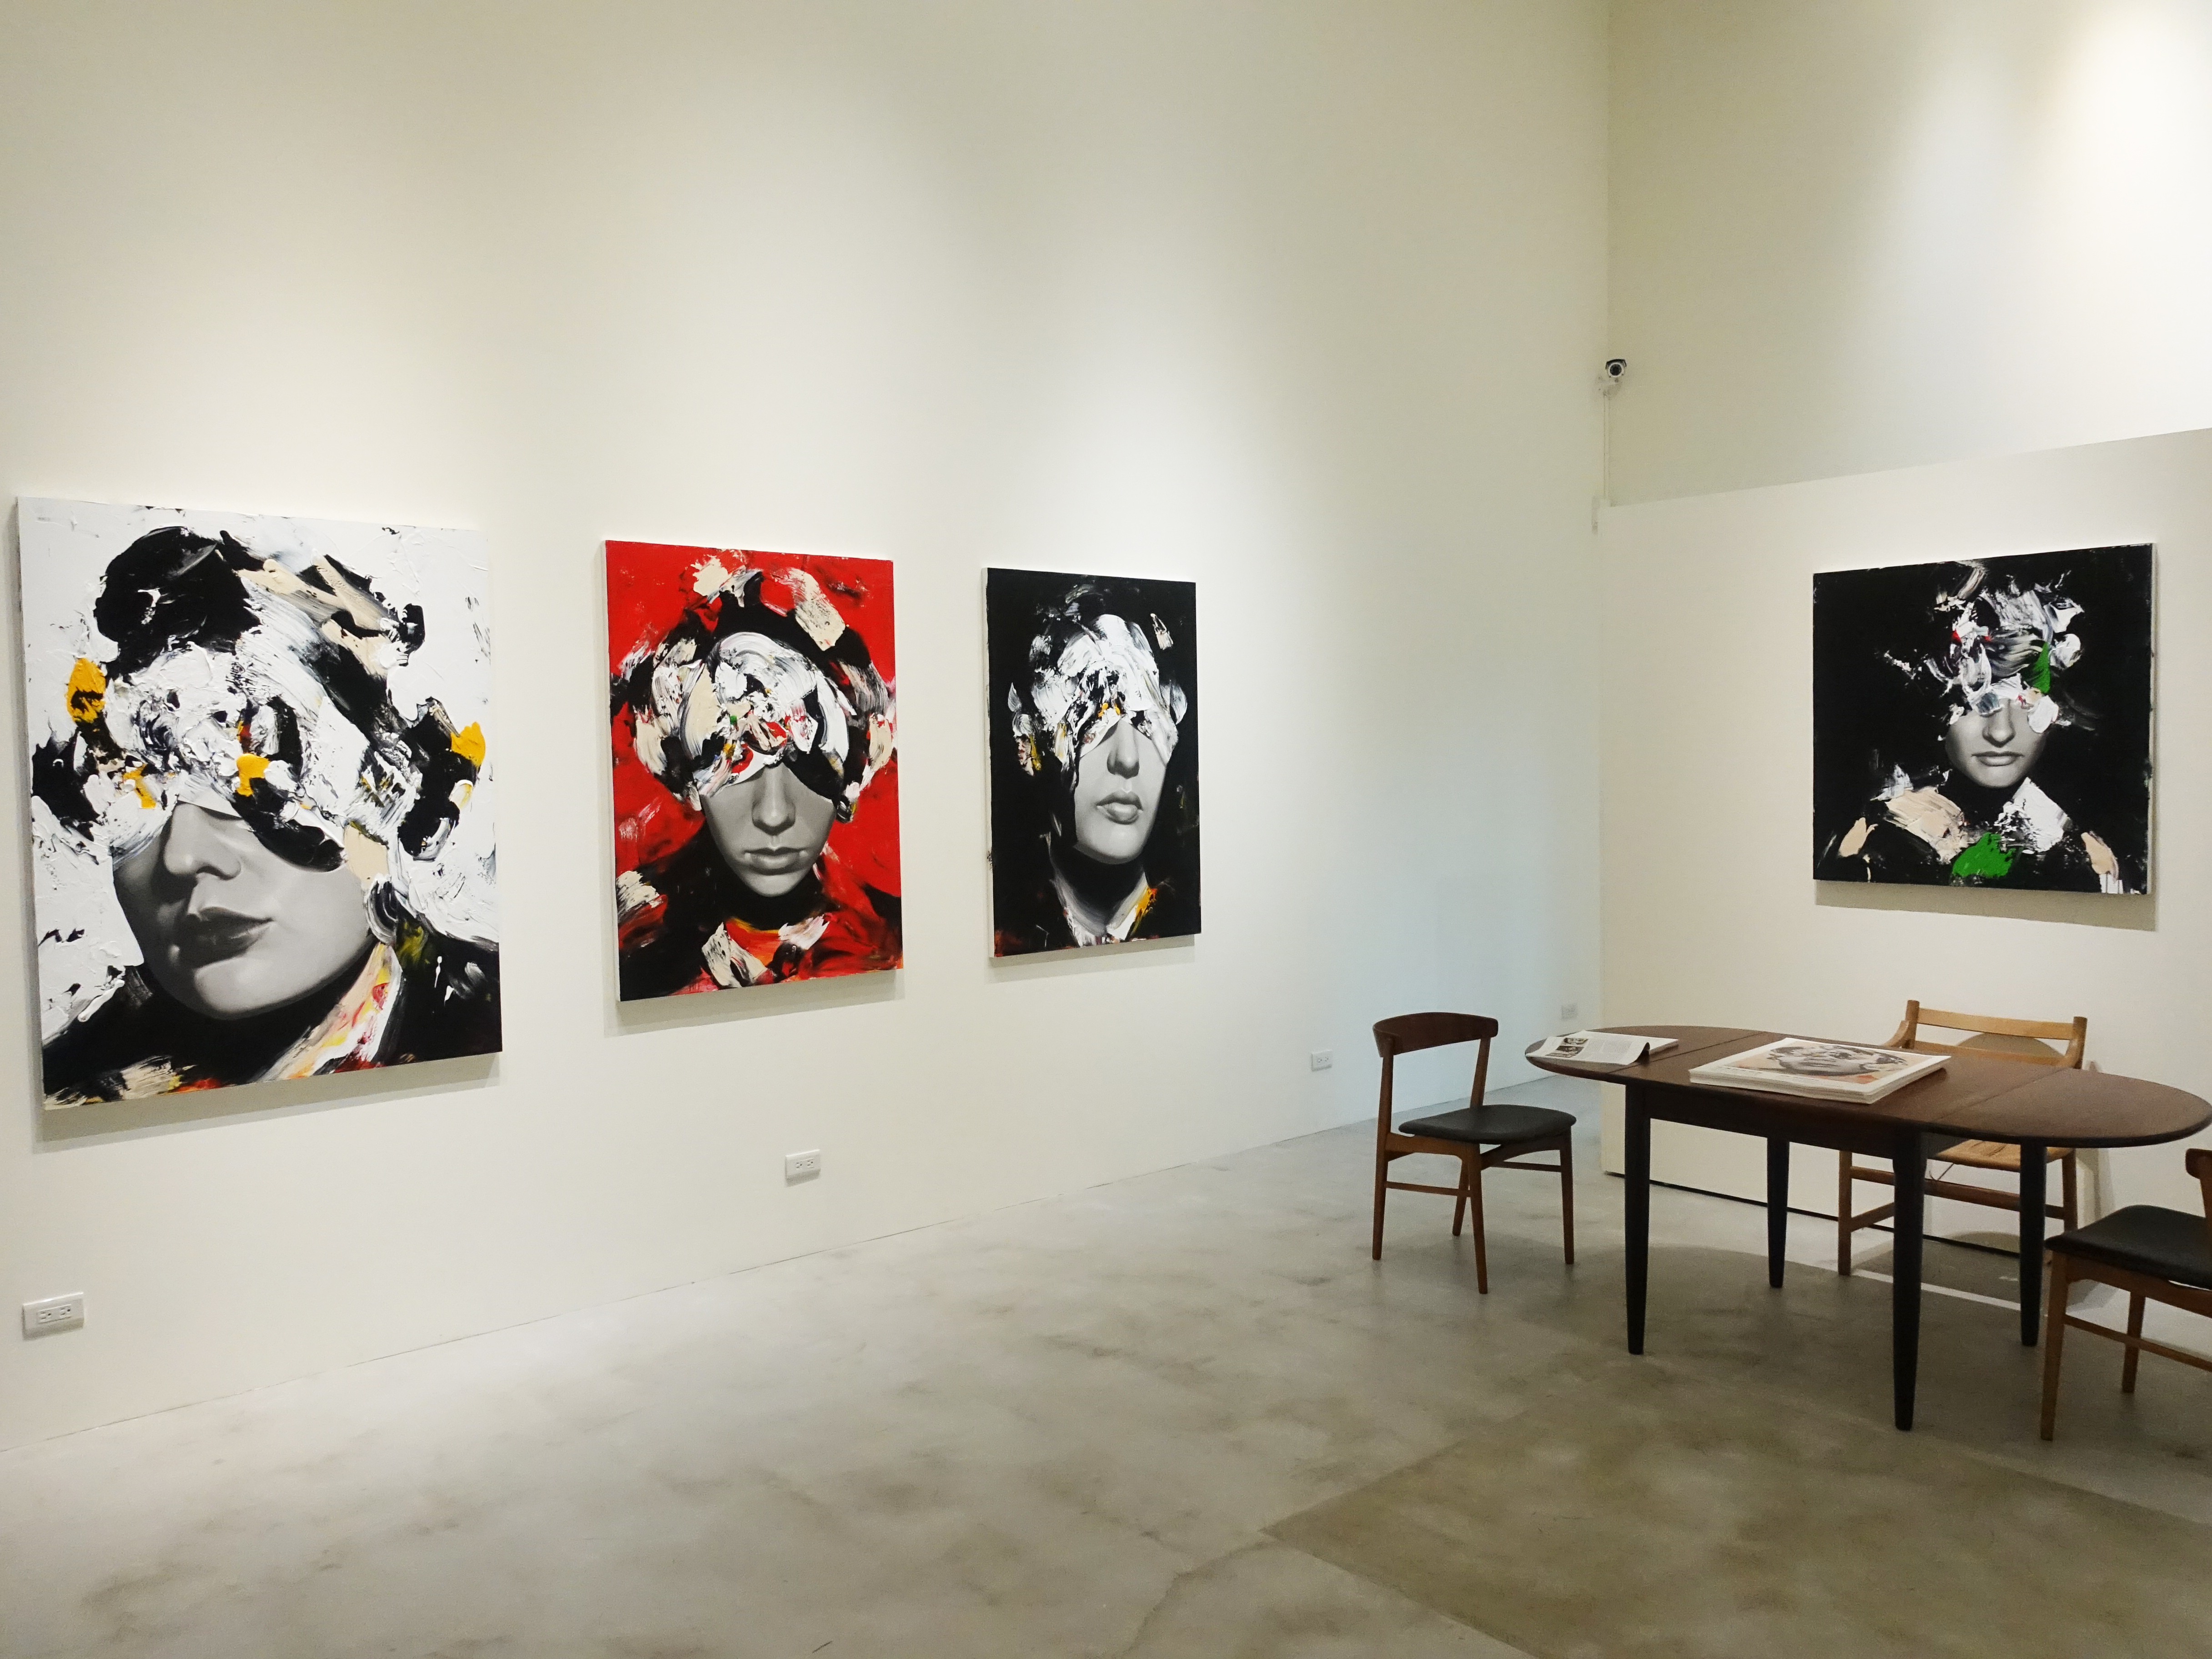 Hiro Hiro Art Space 展出藝術家佐藤誠高創作個展《表面、真實之離散》。